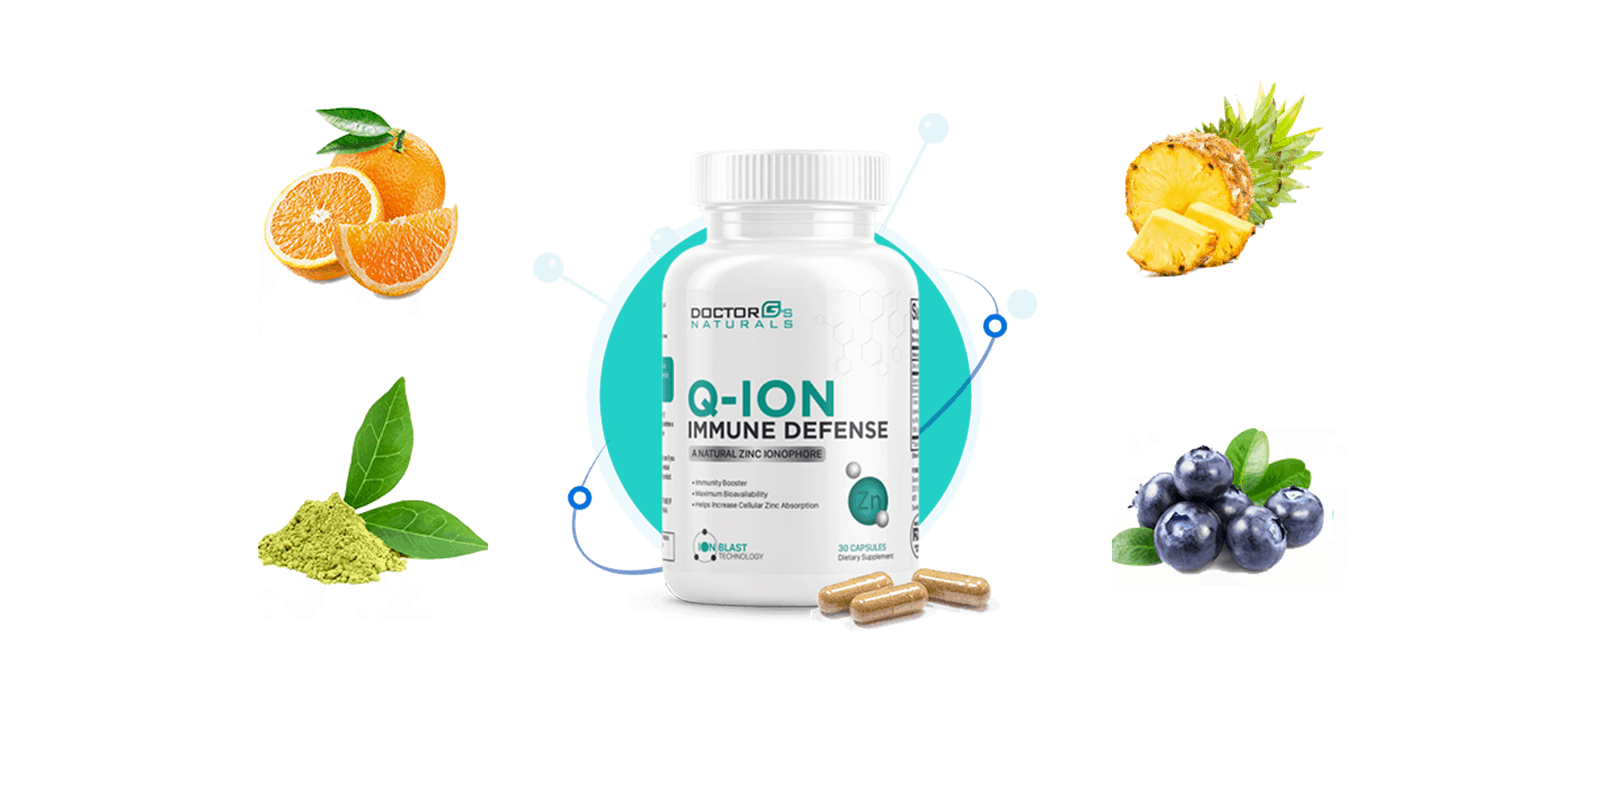 Q-ION Immune Defence ingredients